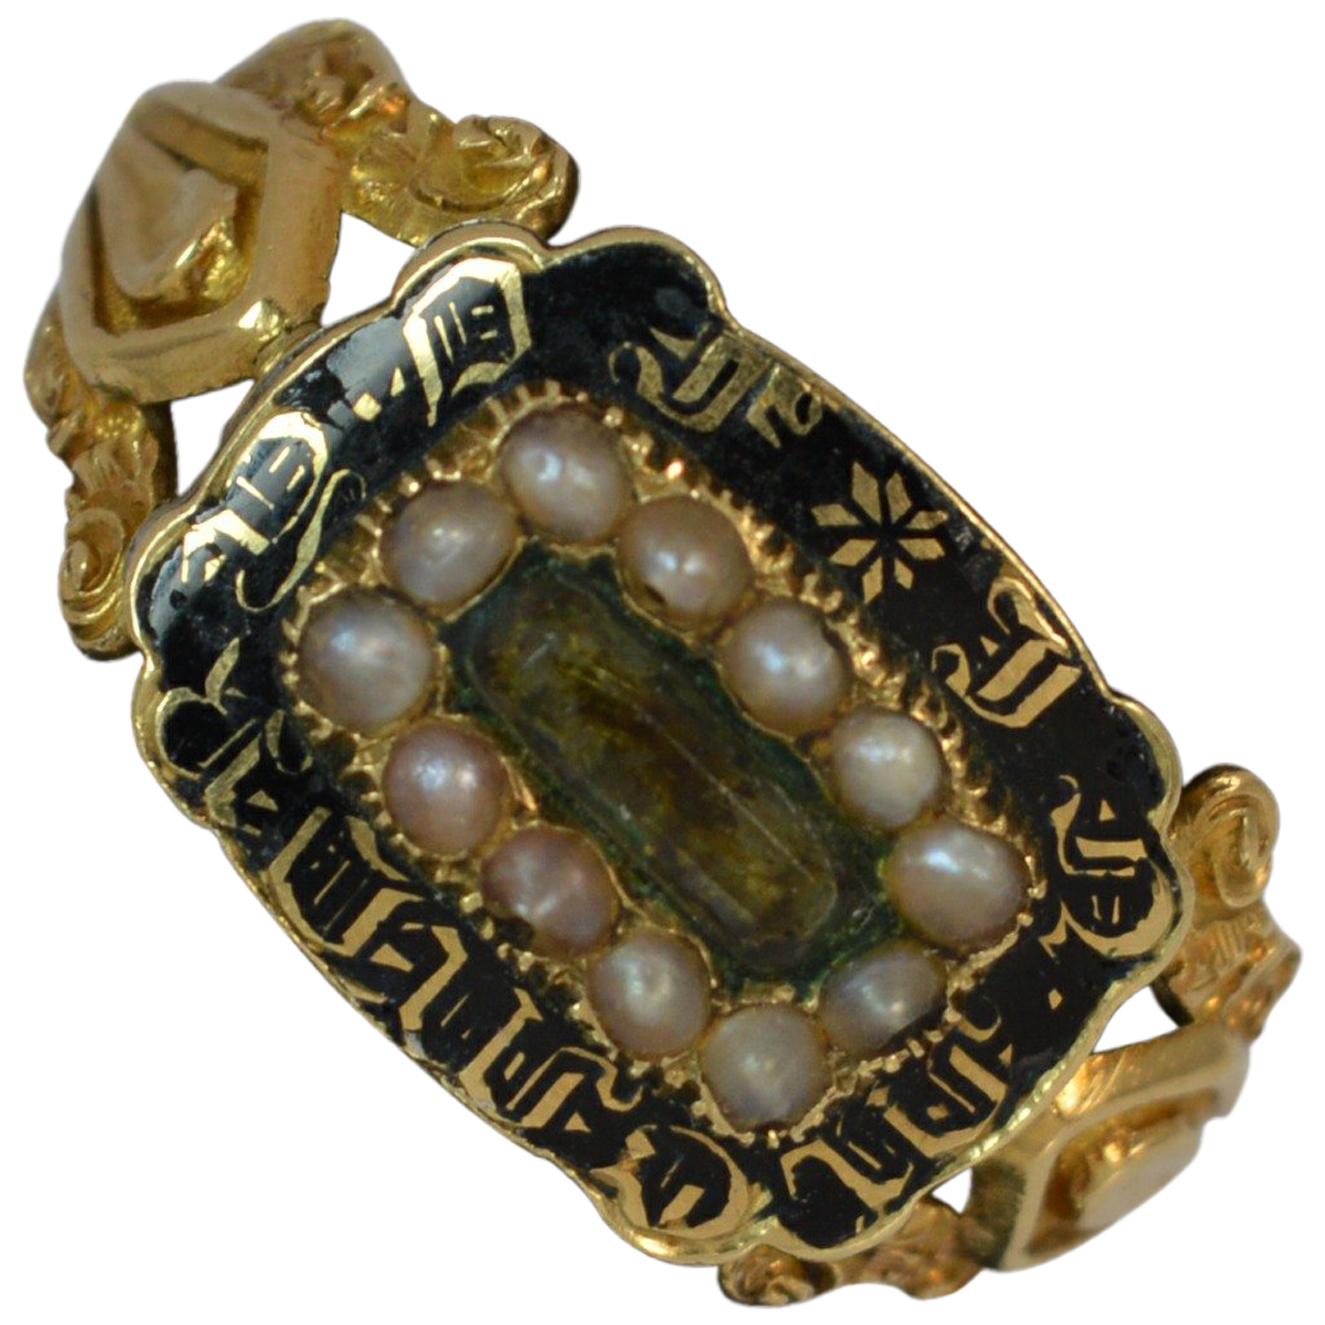 1834 William IV 18 Carat Gold and Enamel Mourning Ring